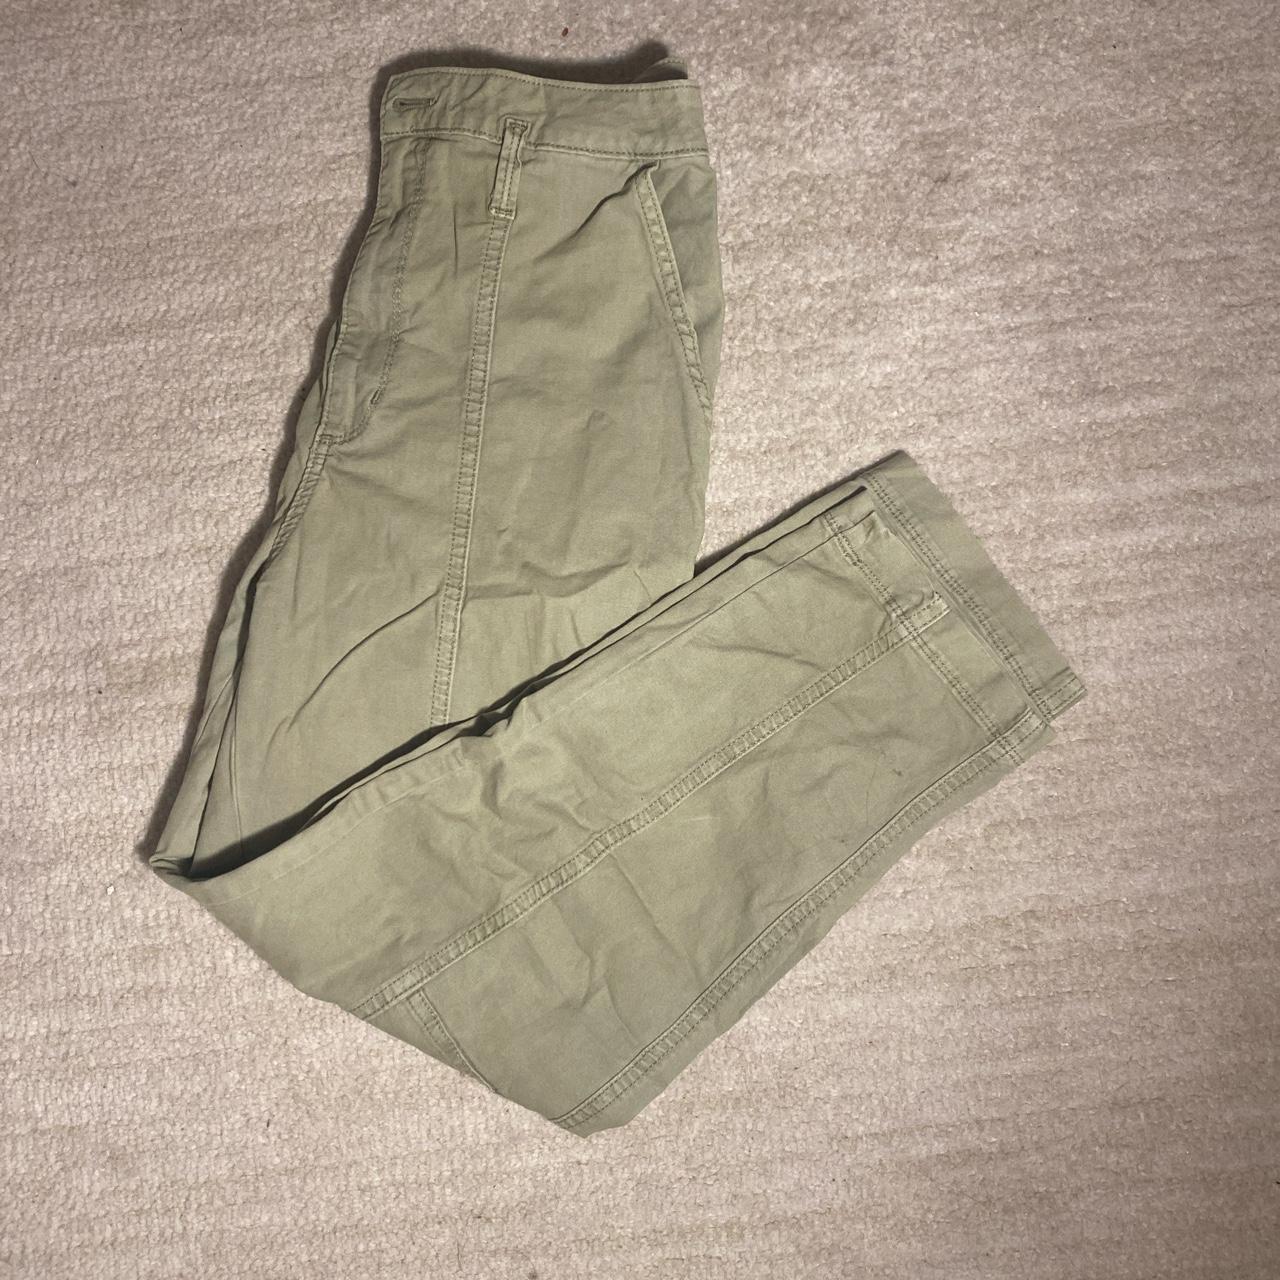 Cargo green pants from Target - Depop